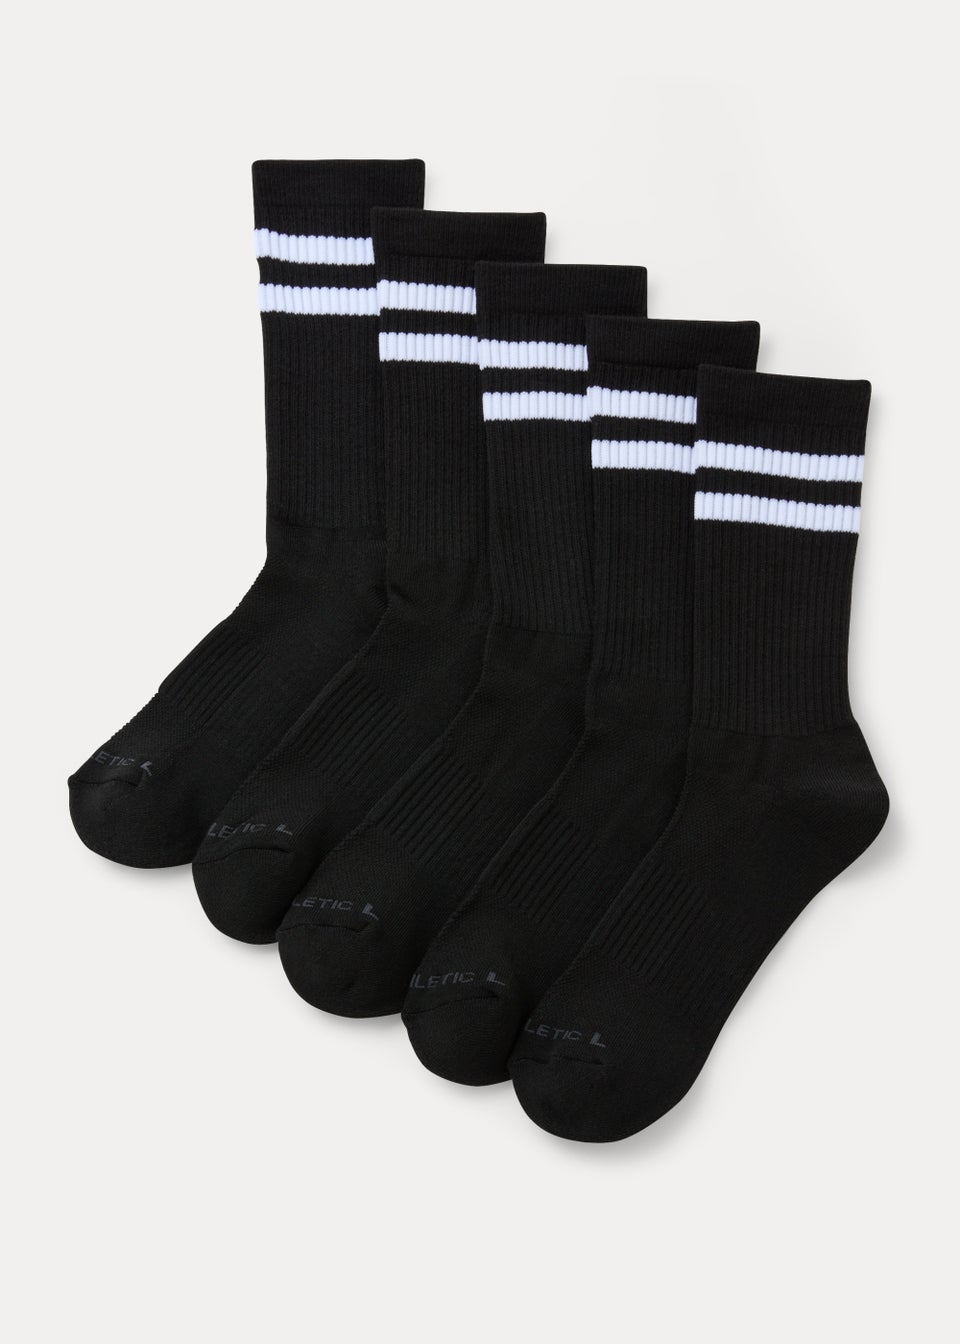 US Athletic 5 Pack Black Sports Socks